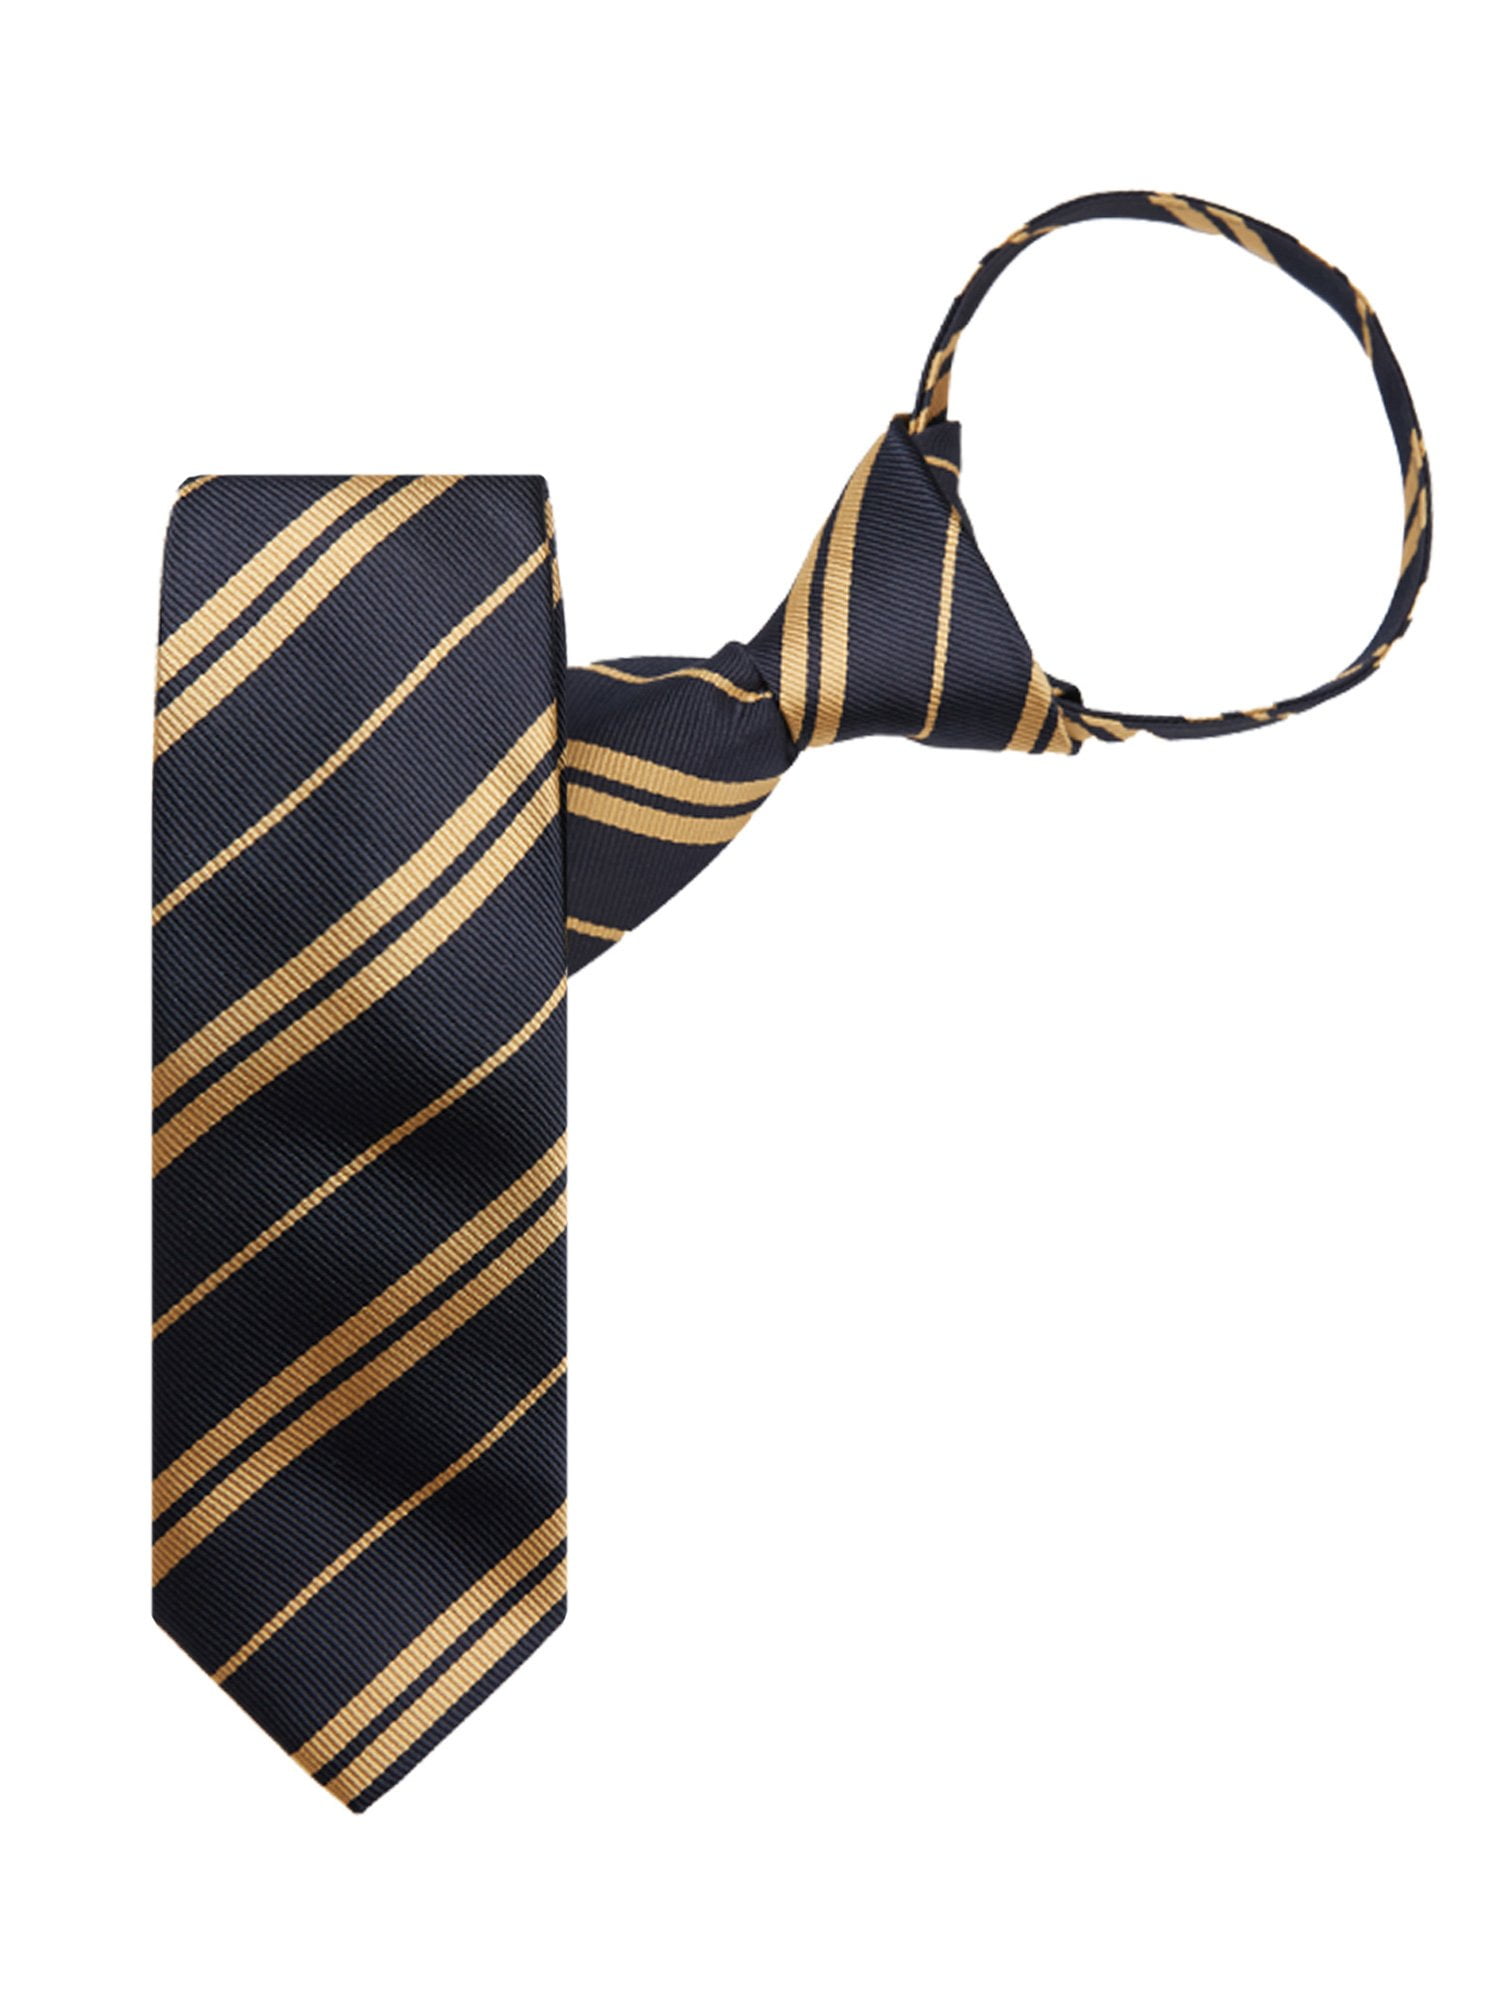 New Boys Zipper Adjustable Pre-tied Necktie Orange Black Yellow Stripes formal 